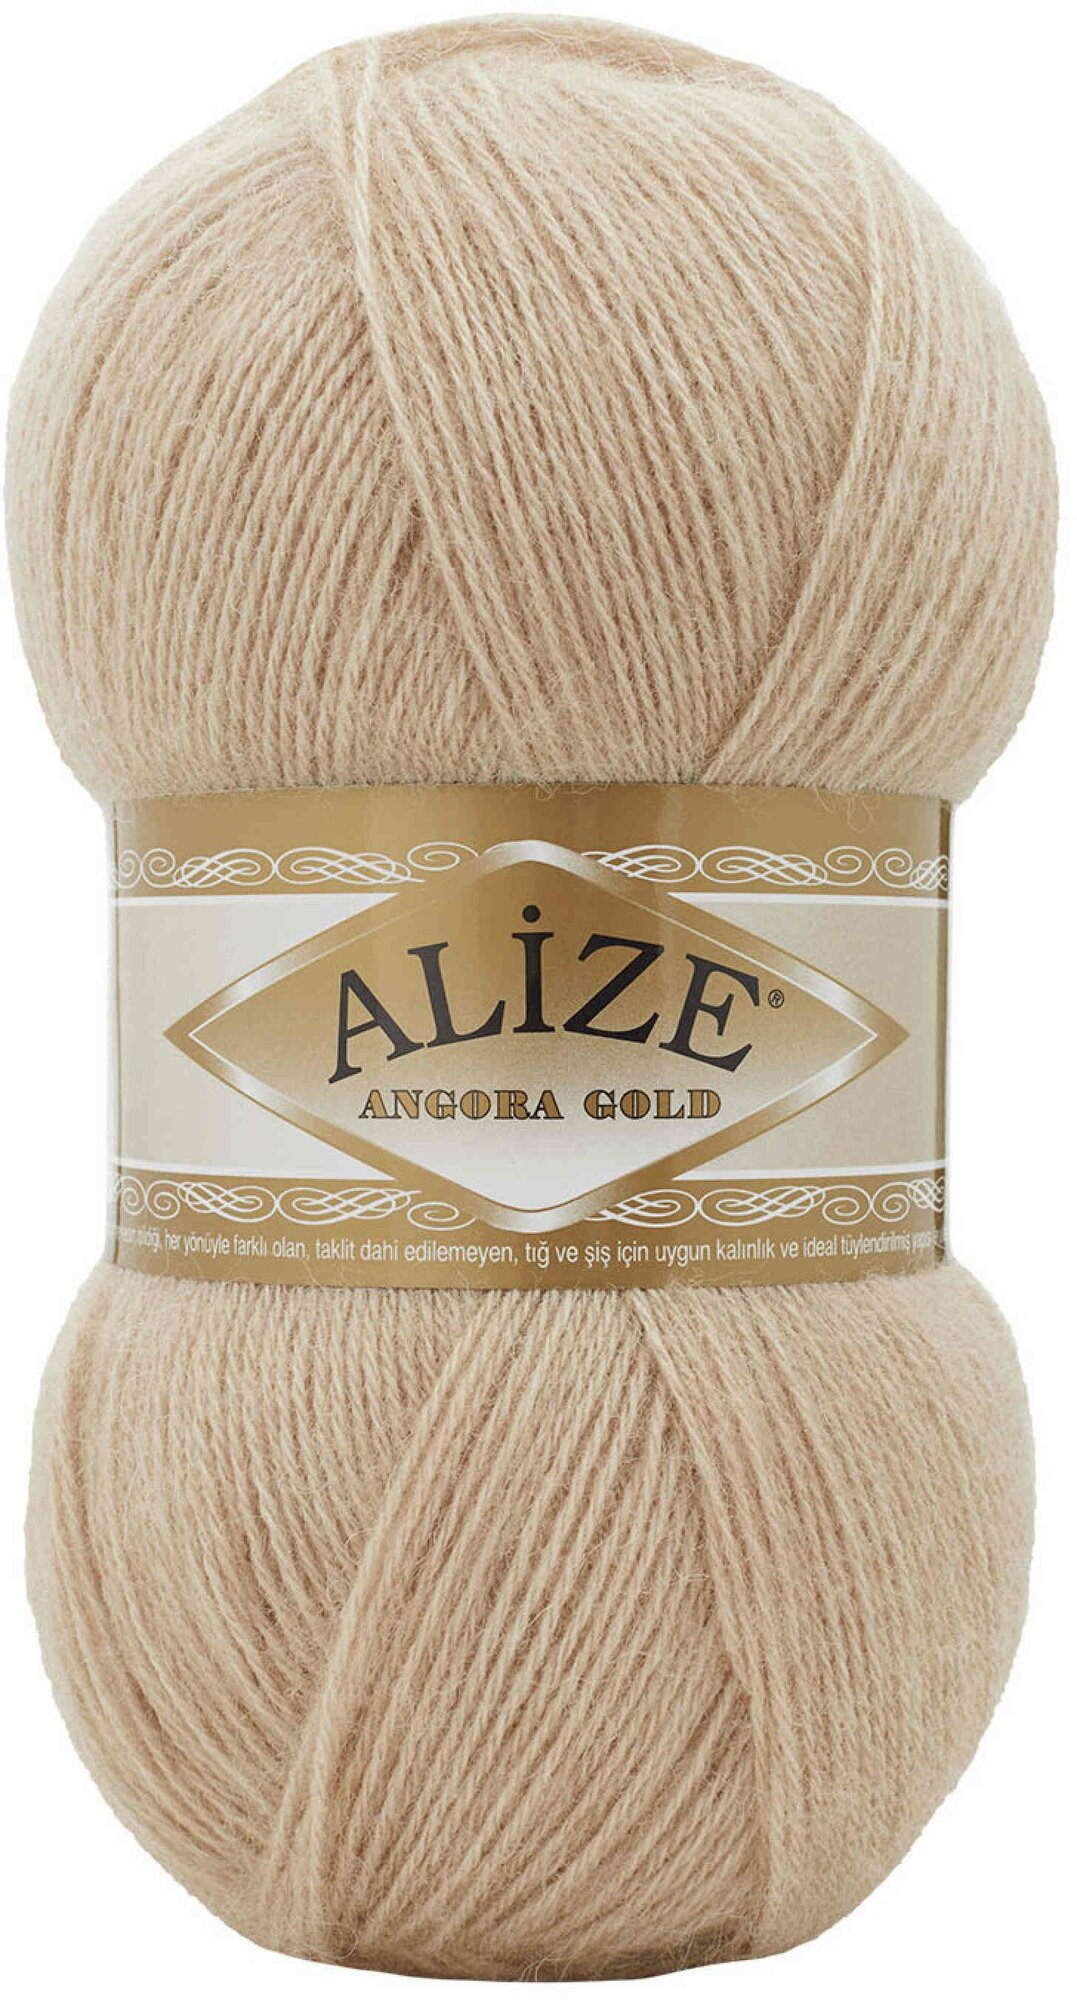  Alize Angora Gold   (524), 80%/20%, 550, 100, 1